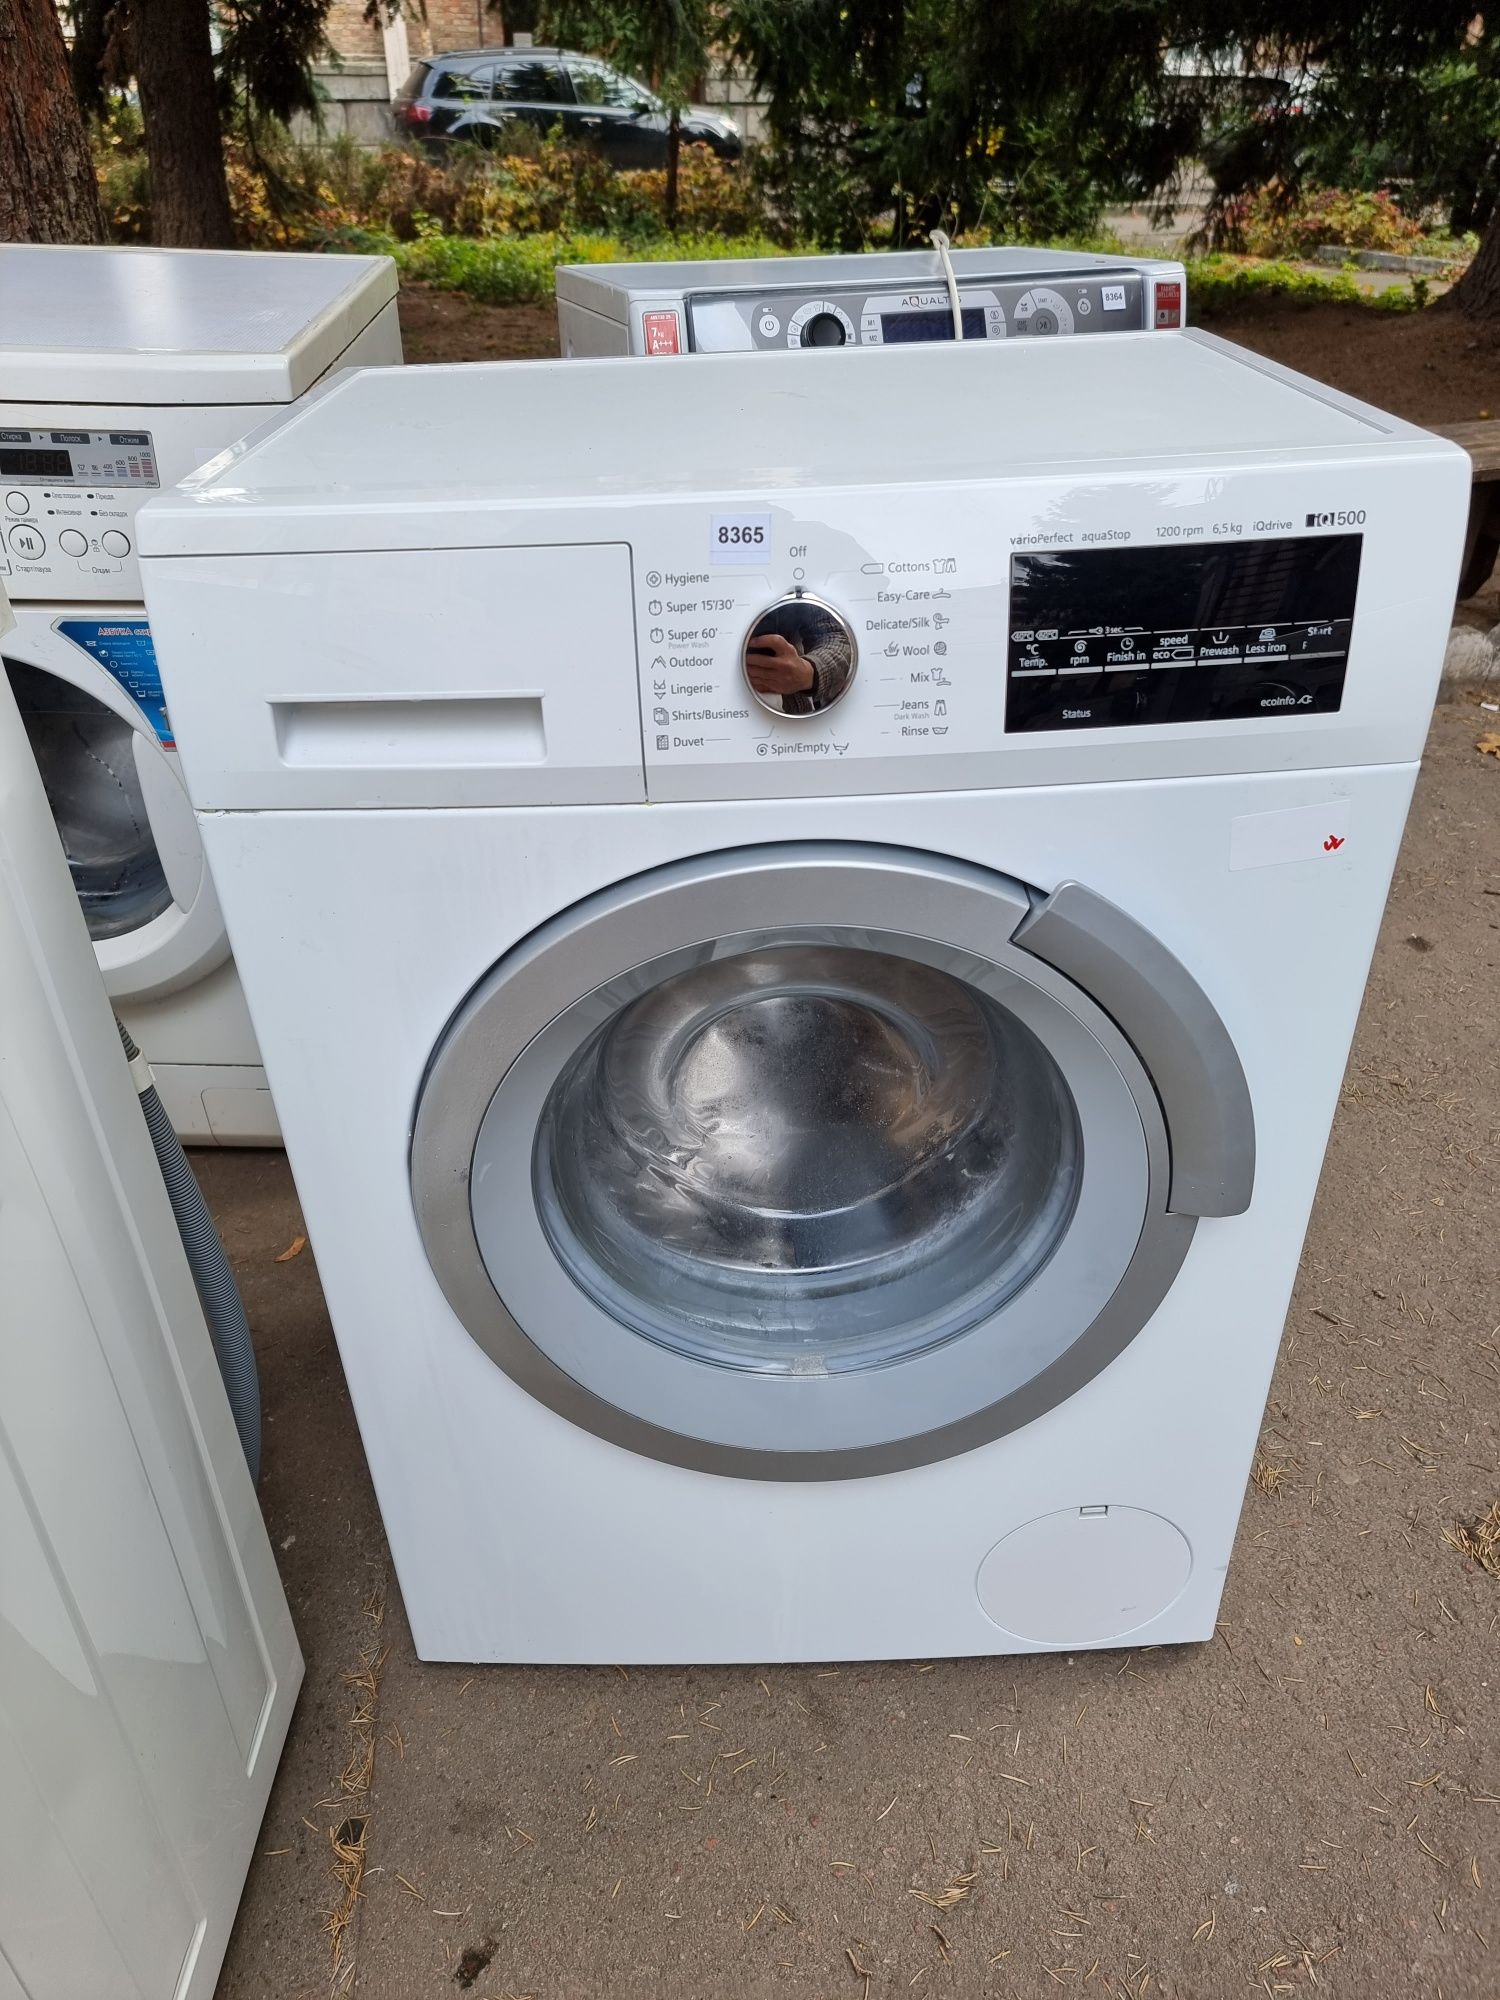 Якісна вузька пральна машина ARISTON RS6OI5*40см. Асортимент.Гарантія.